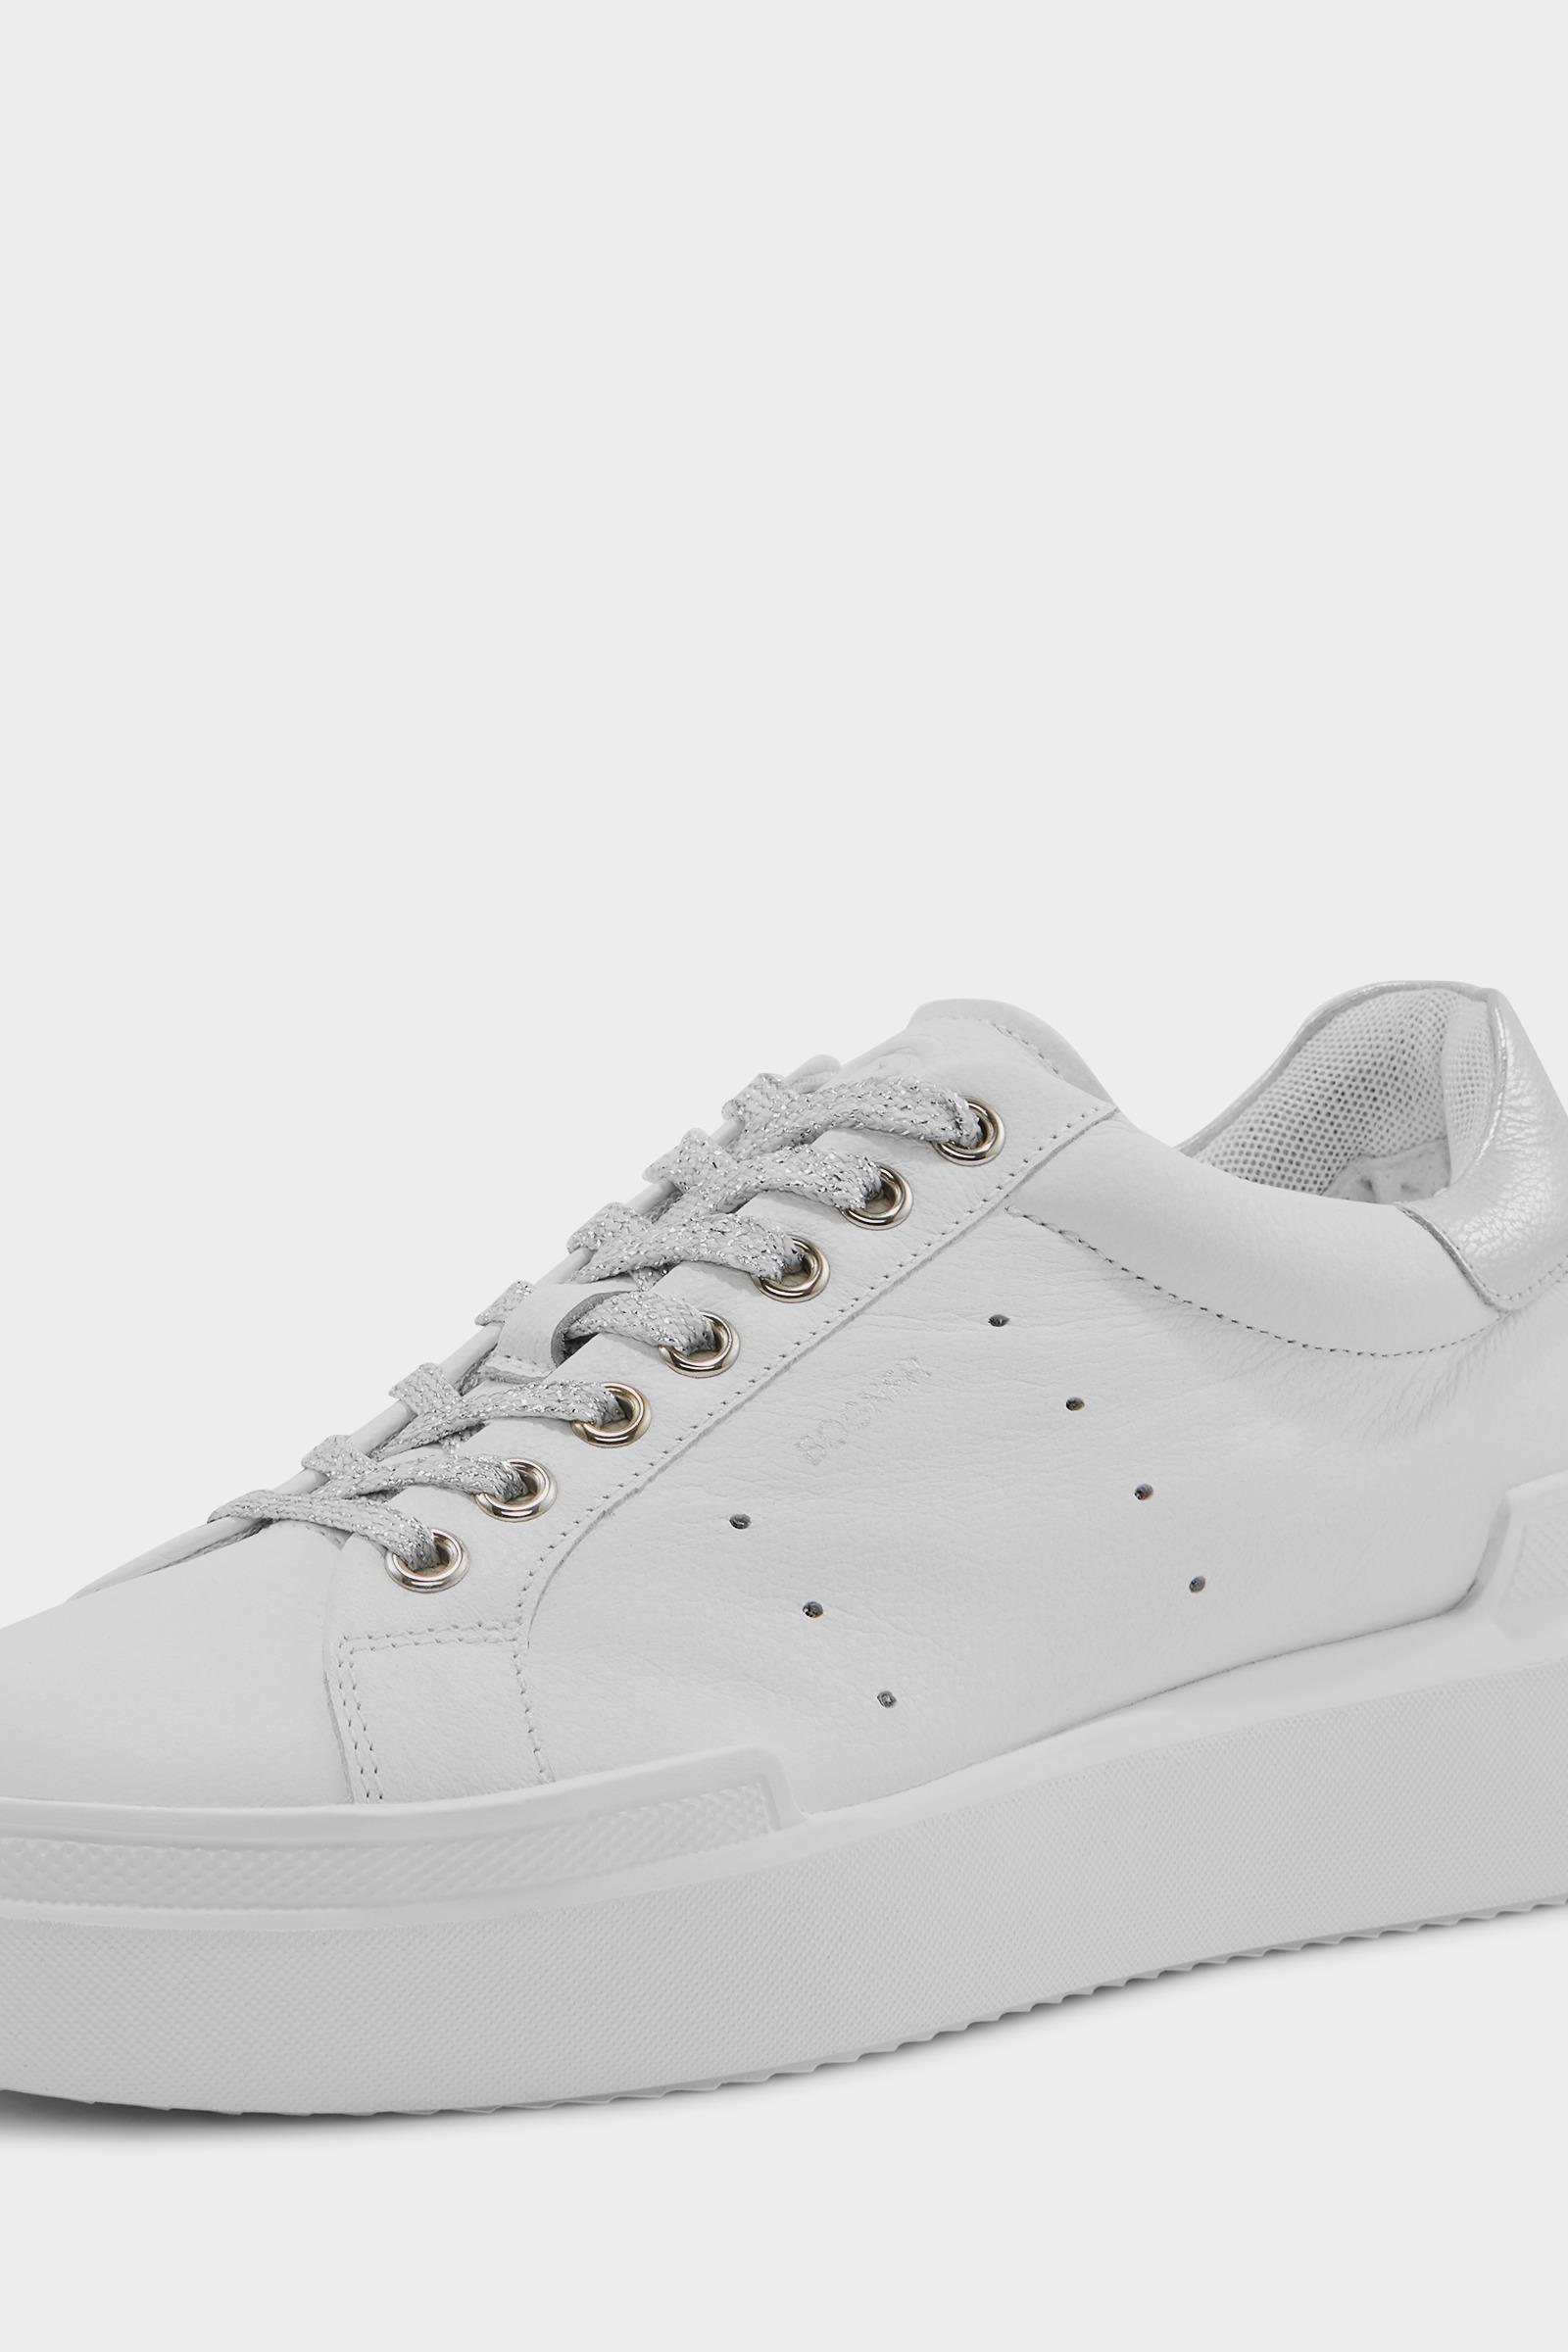 Bogner Leather Hollywood Sneaker In White - Lyst